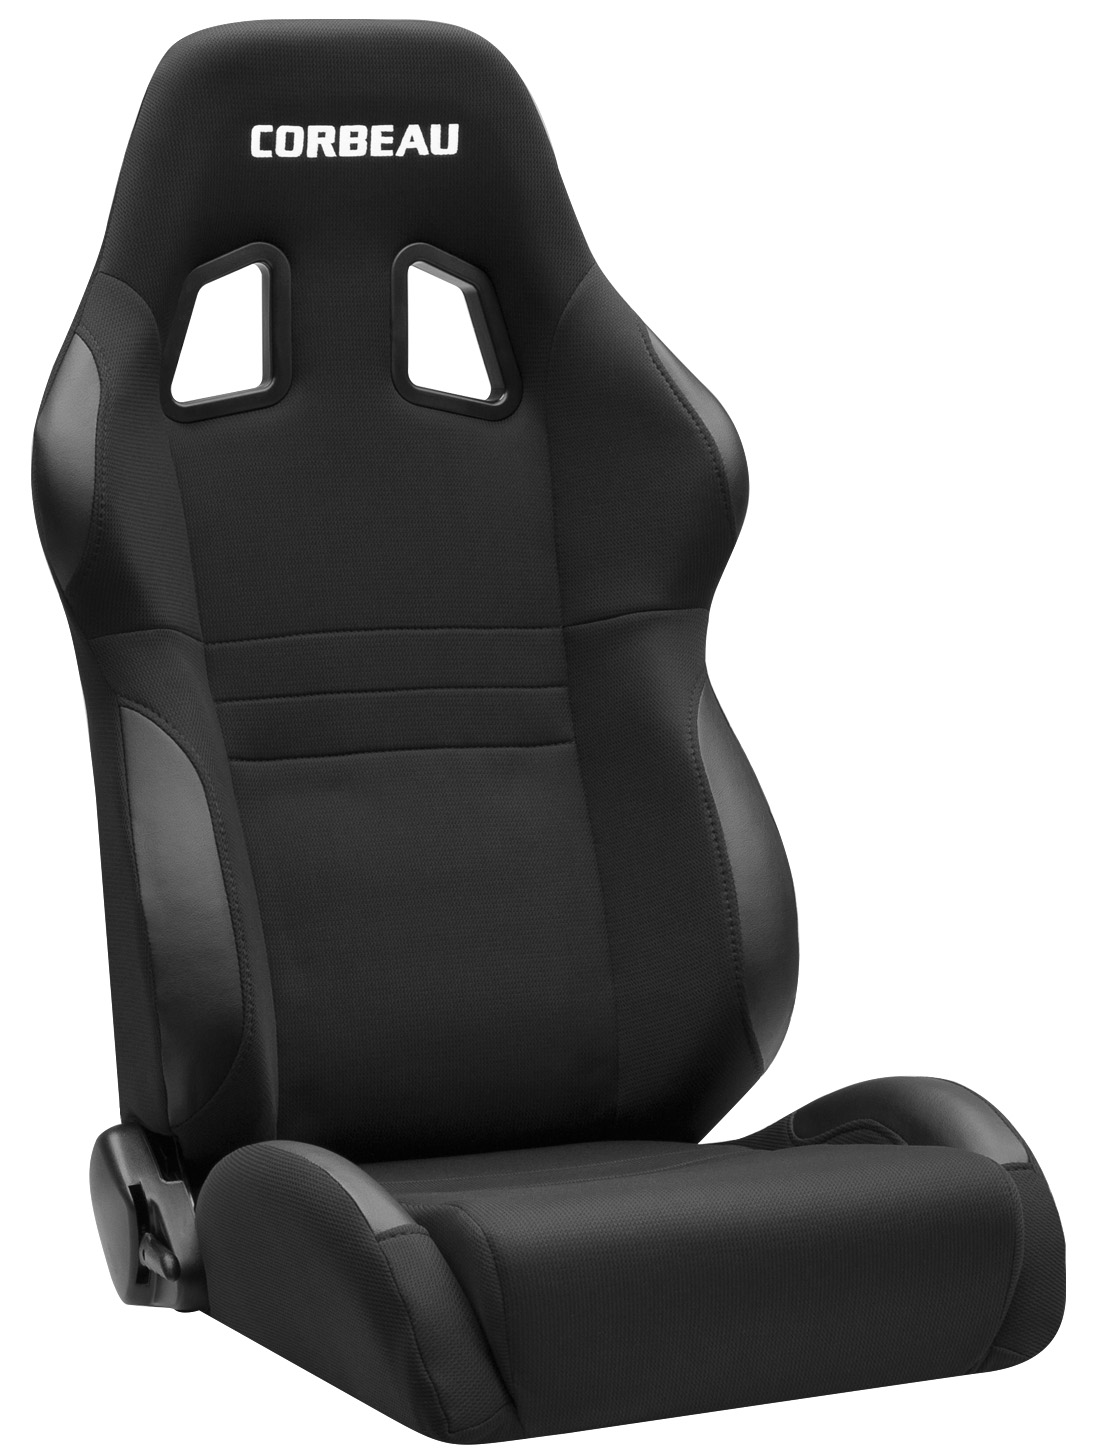 Corbeau A4 Racing Seat,  Black Cloth, 60091PR